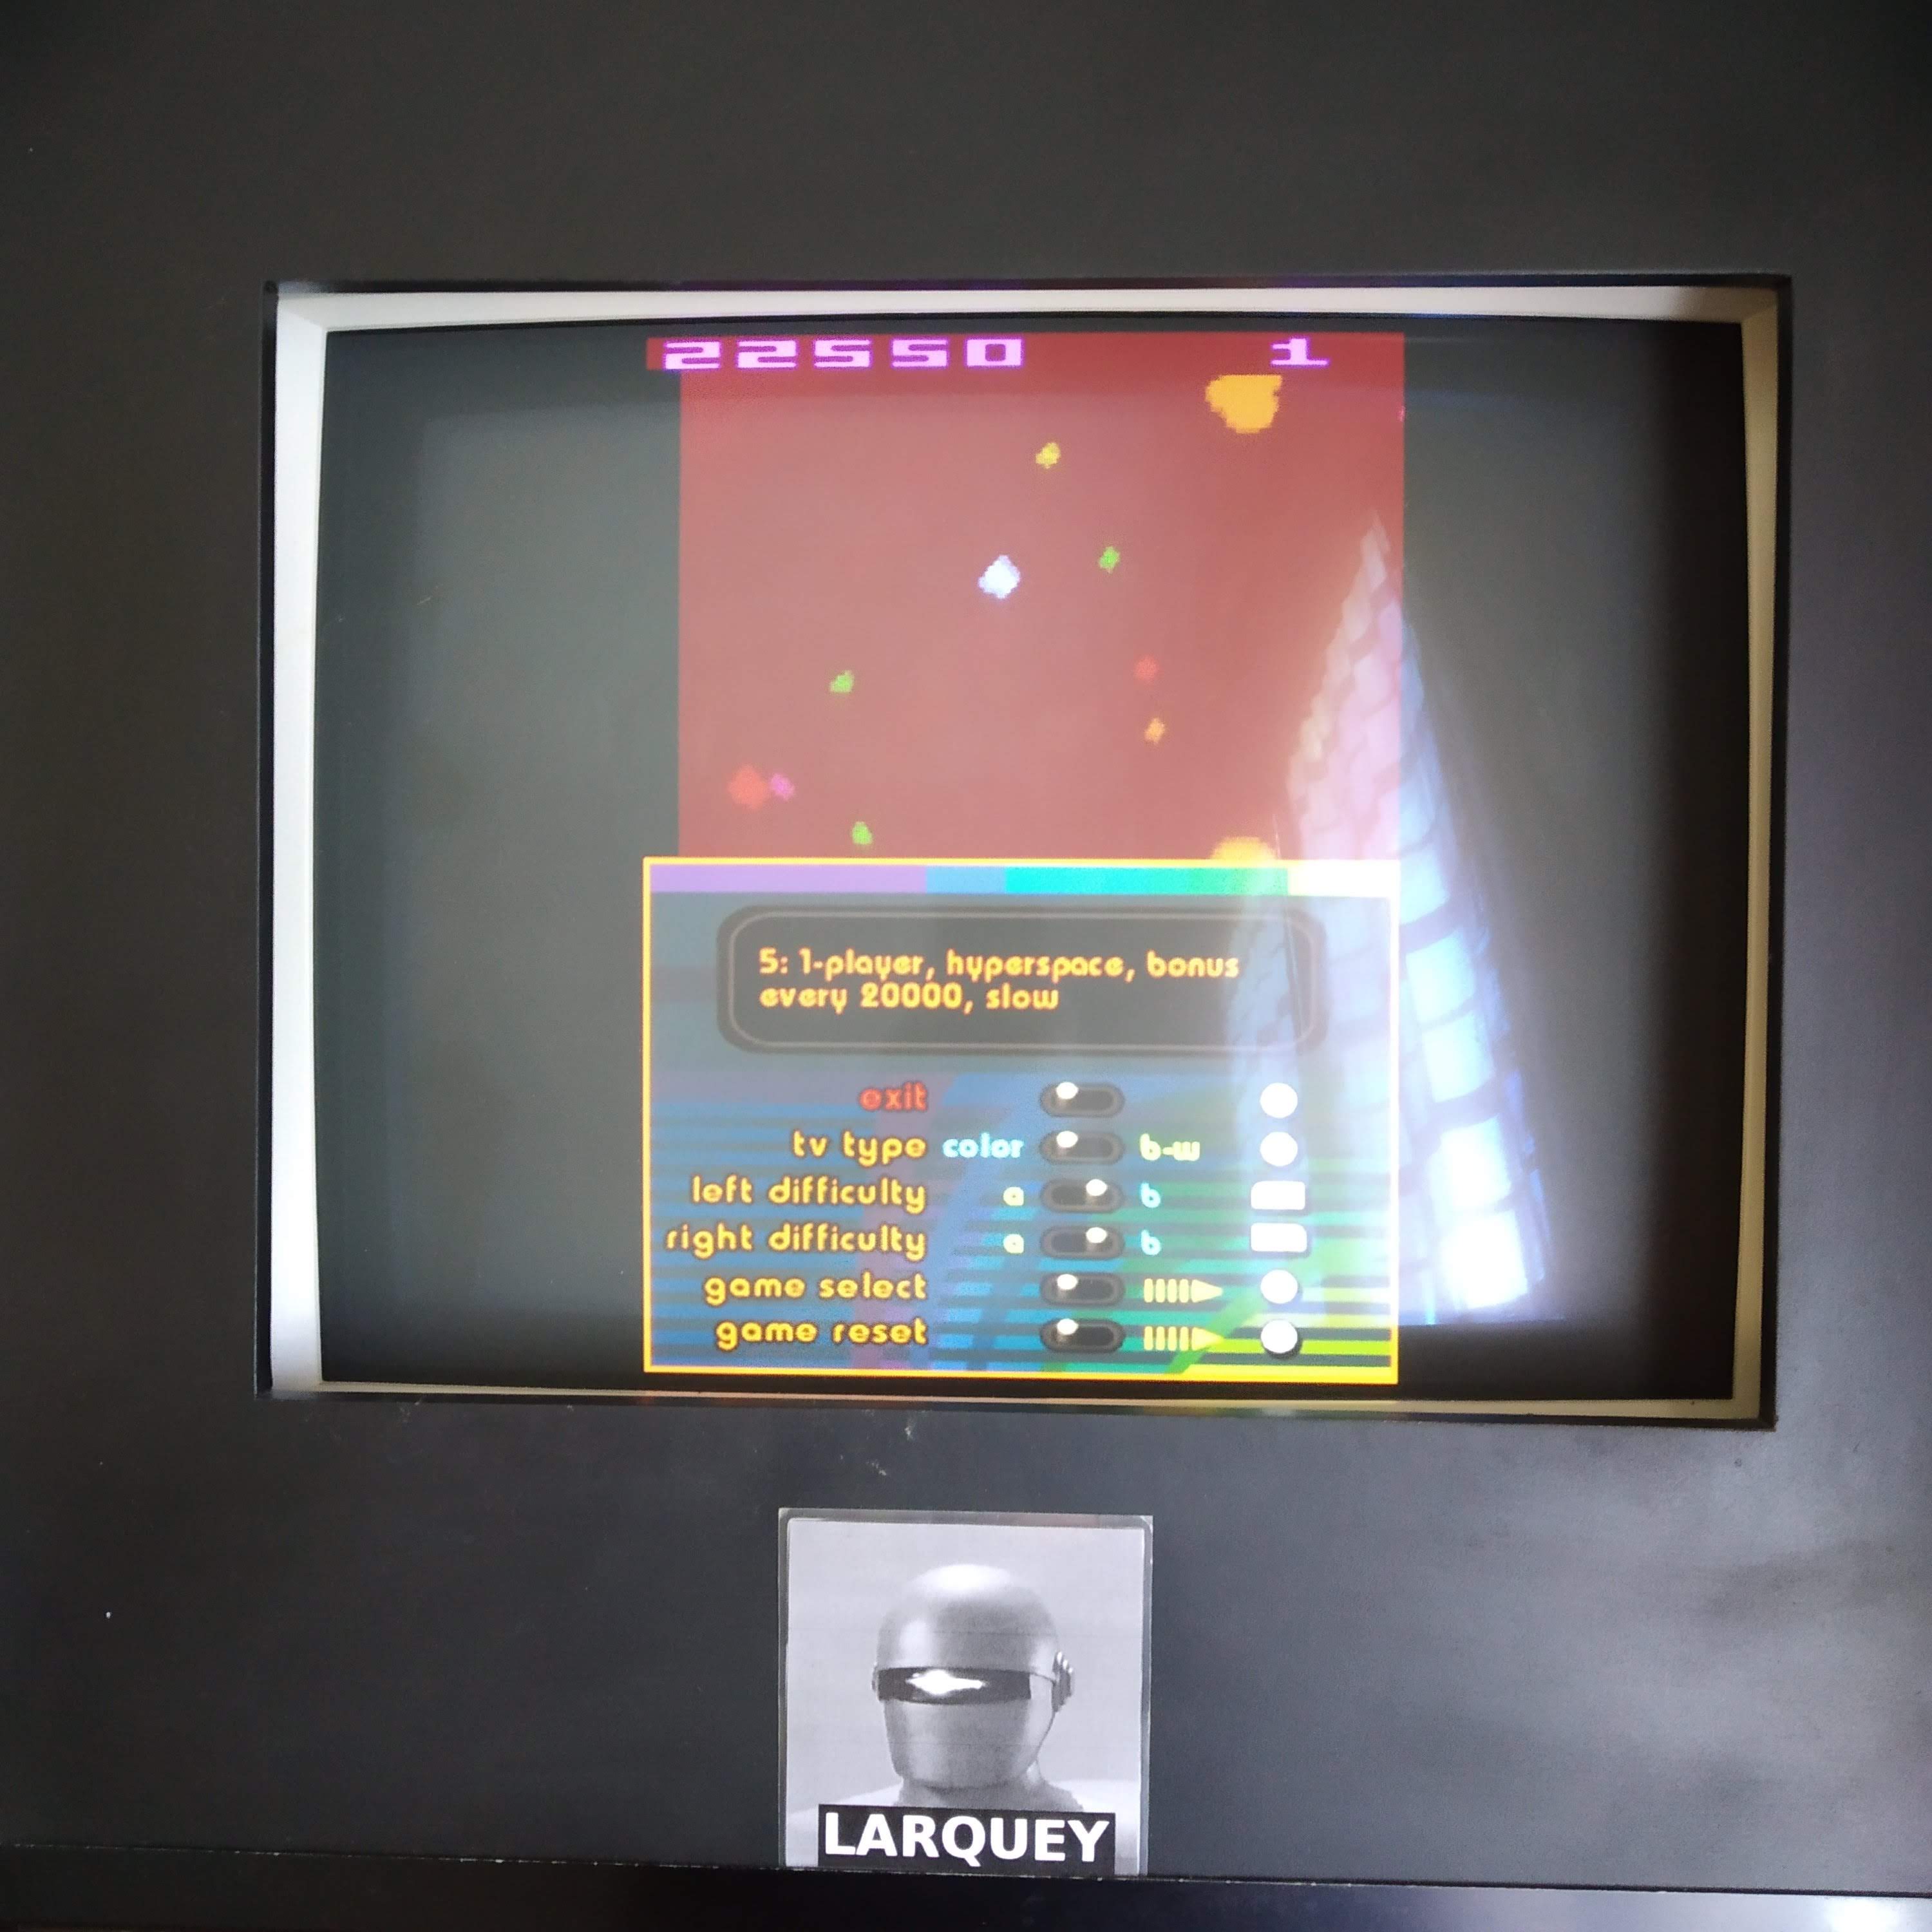 Larquey: Atari Greatest Hits: Volume 1: Asteroids: Game 5 [Atari 2600] (Nintendo DS Emulated) 22,550 points on 2020-05-03 05:49:27